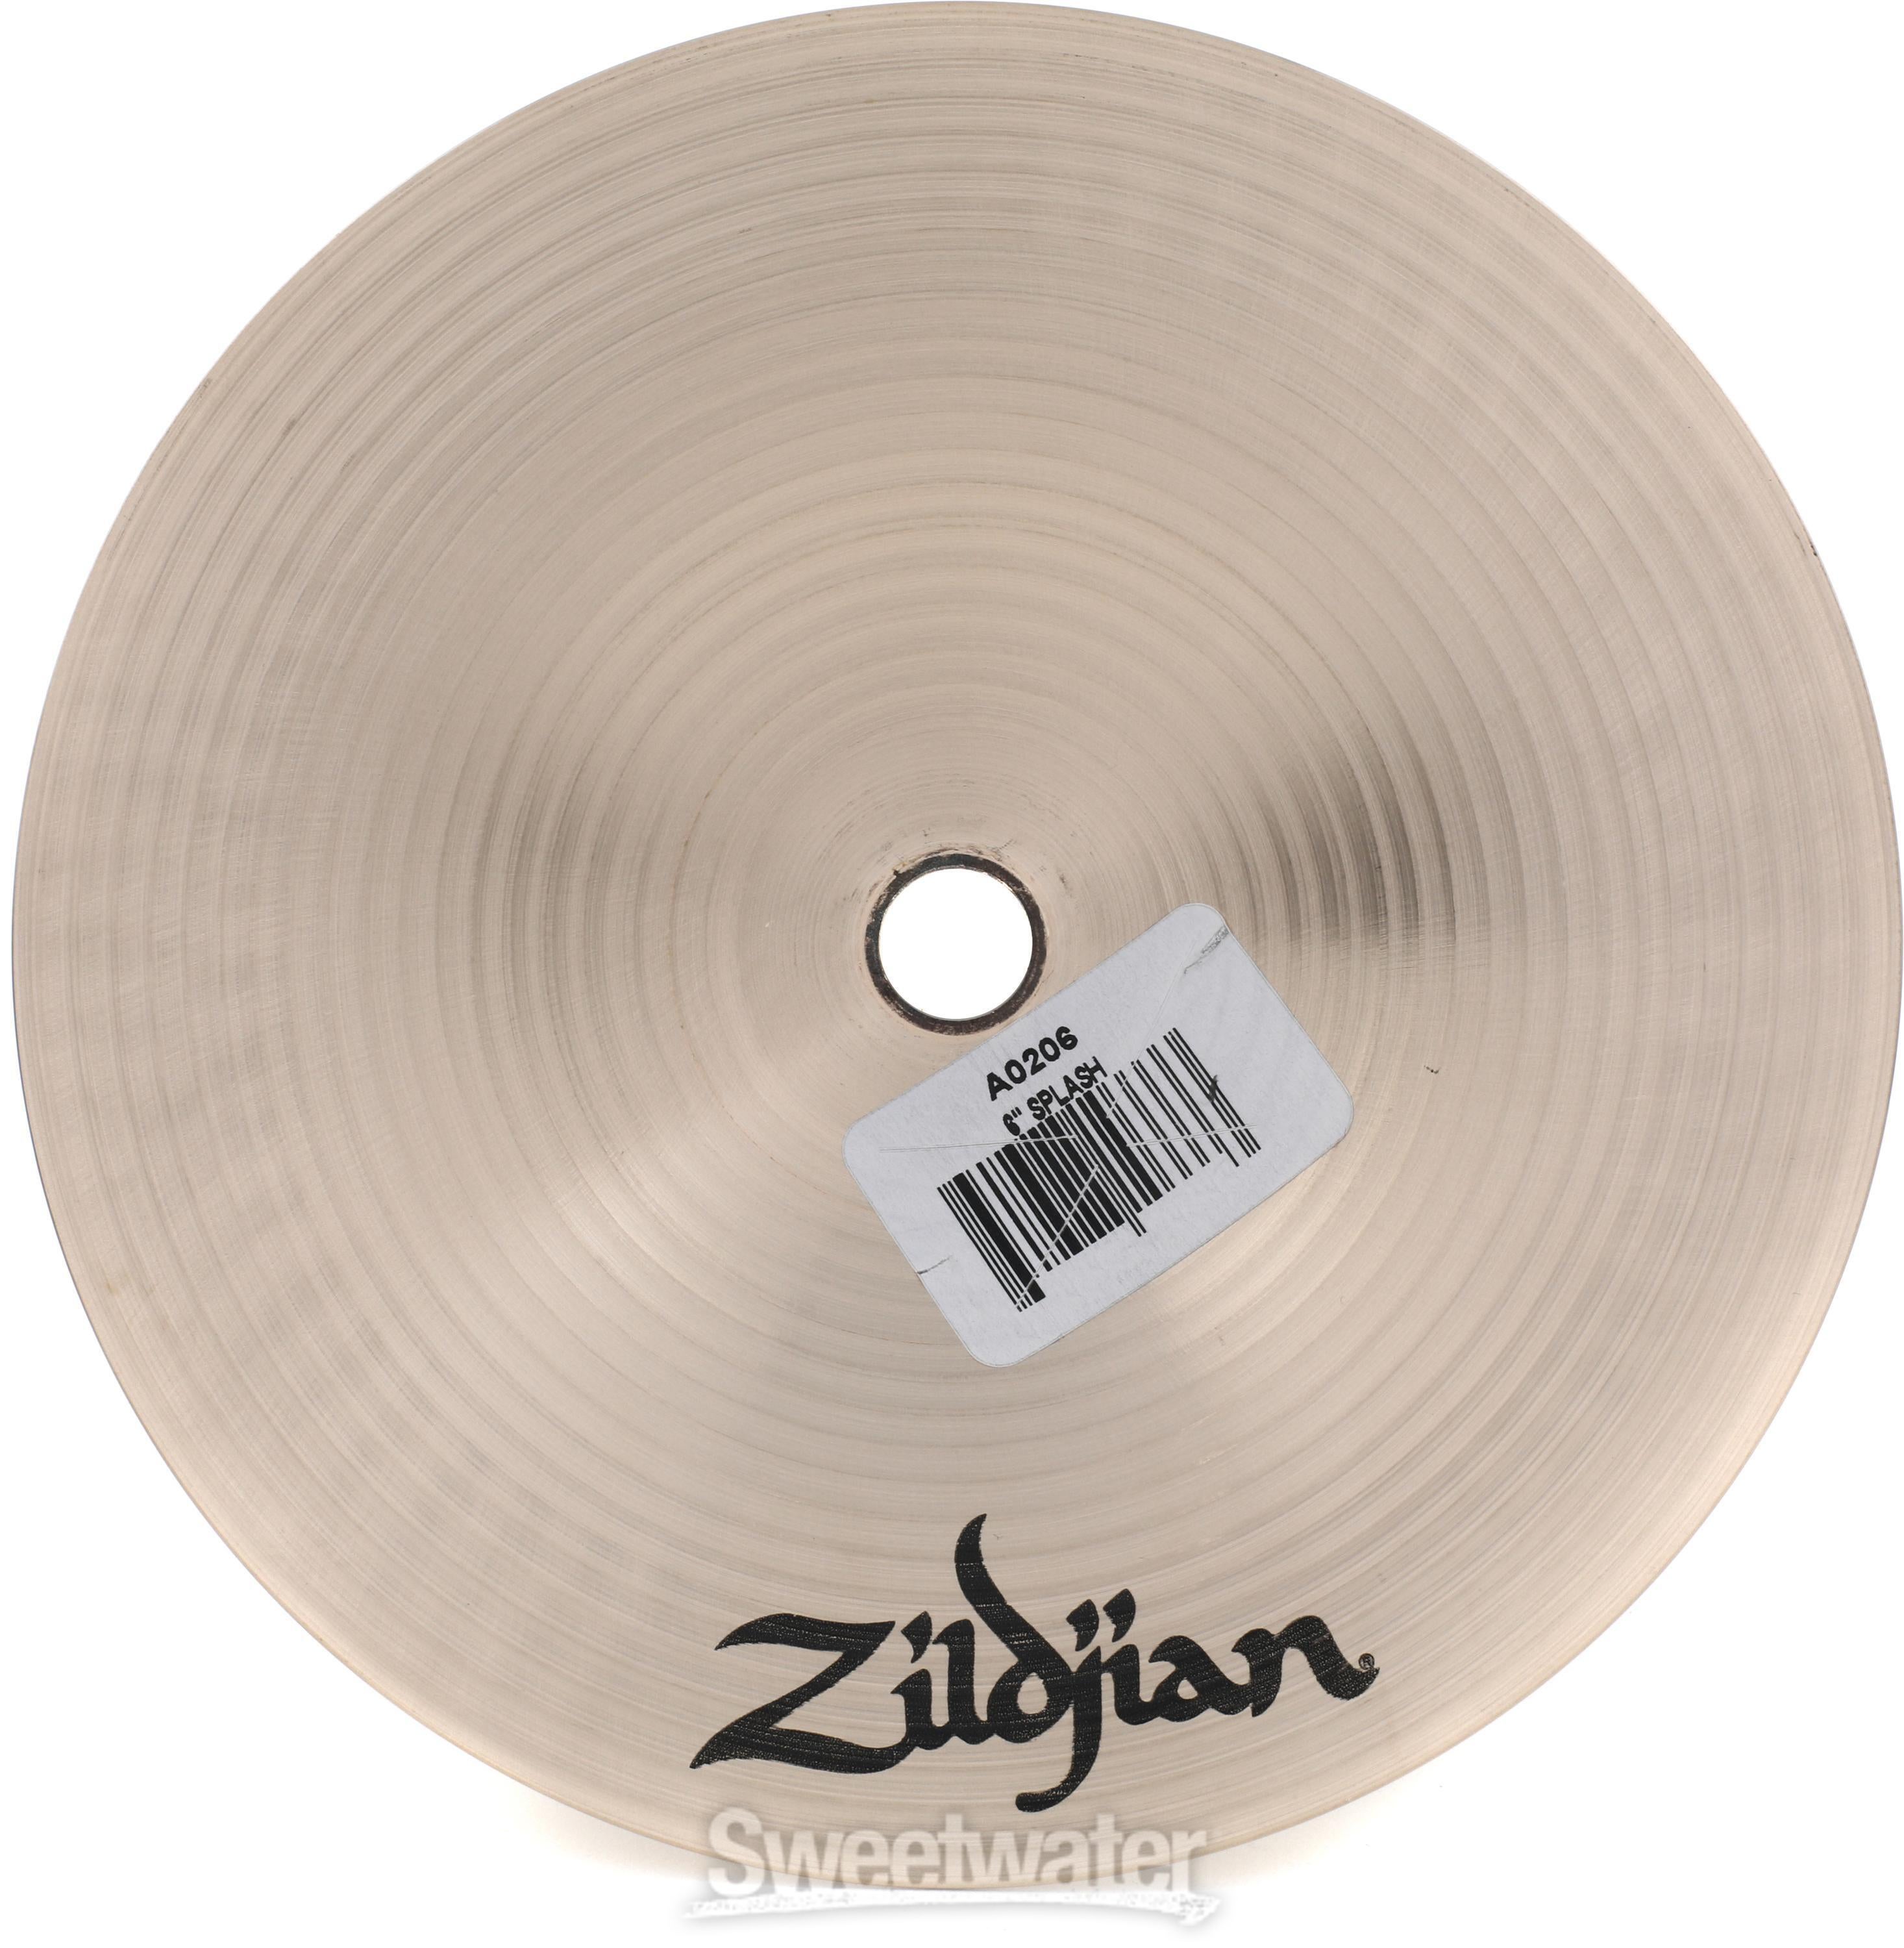 Zildjian 6-inch A Zildjian Splash Cymbal | Sweetwater